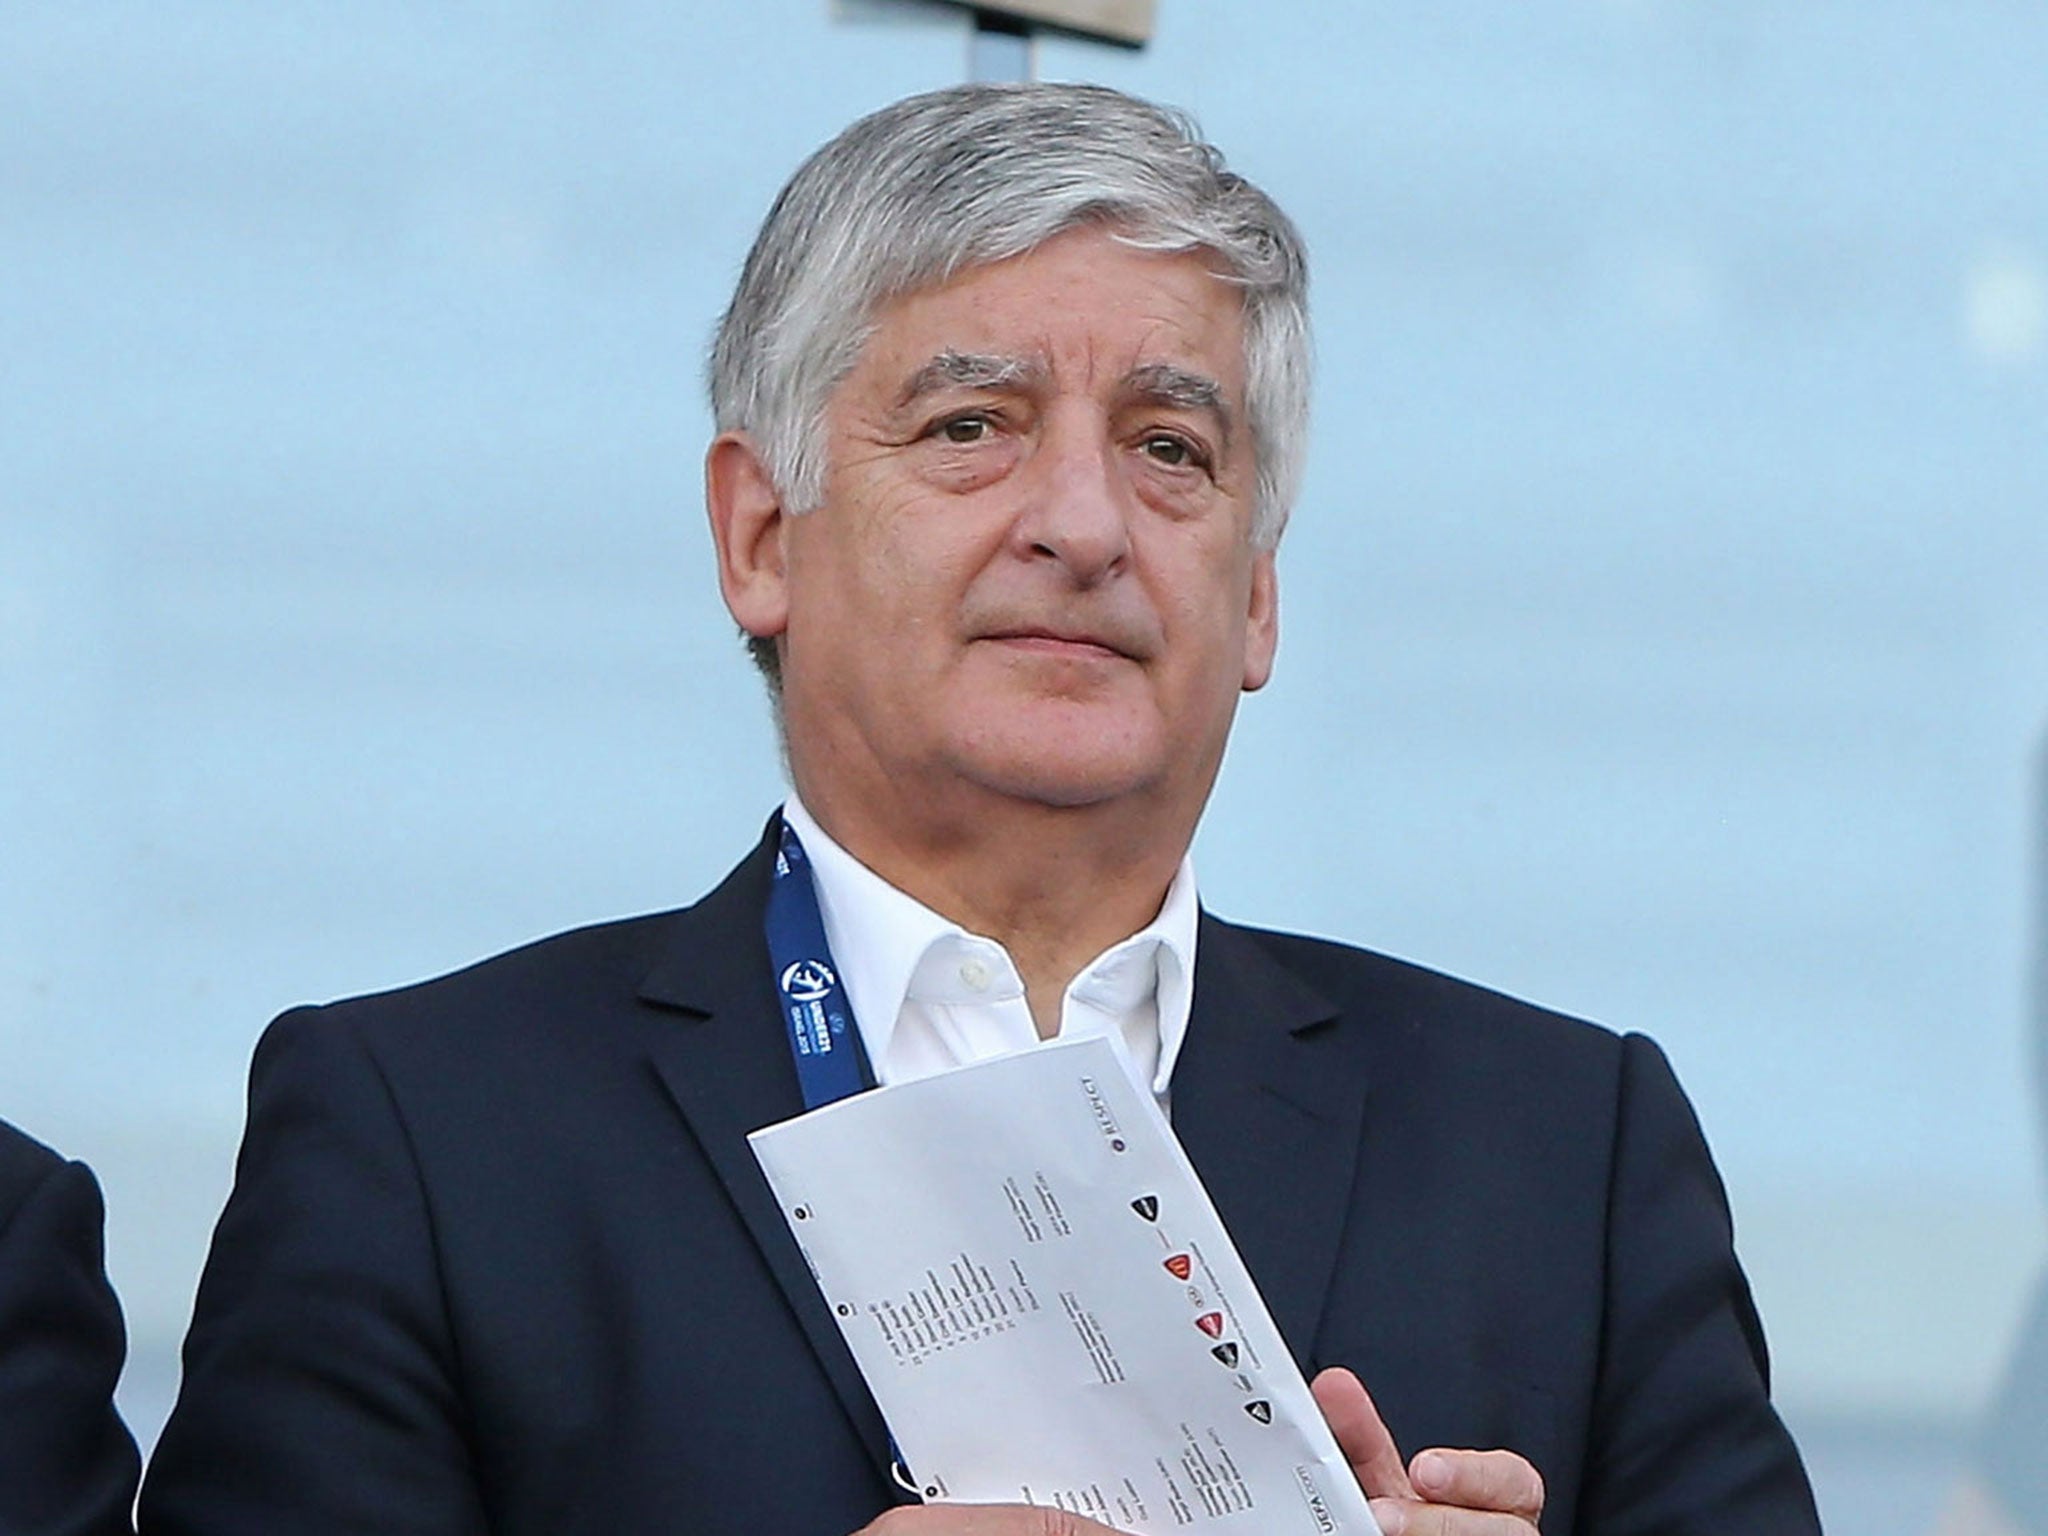 David Bernstein has called for a Uefa boycott in 2018 or 2022